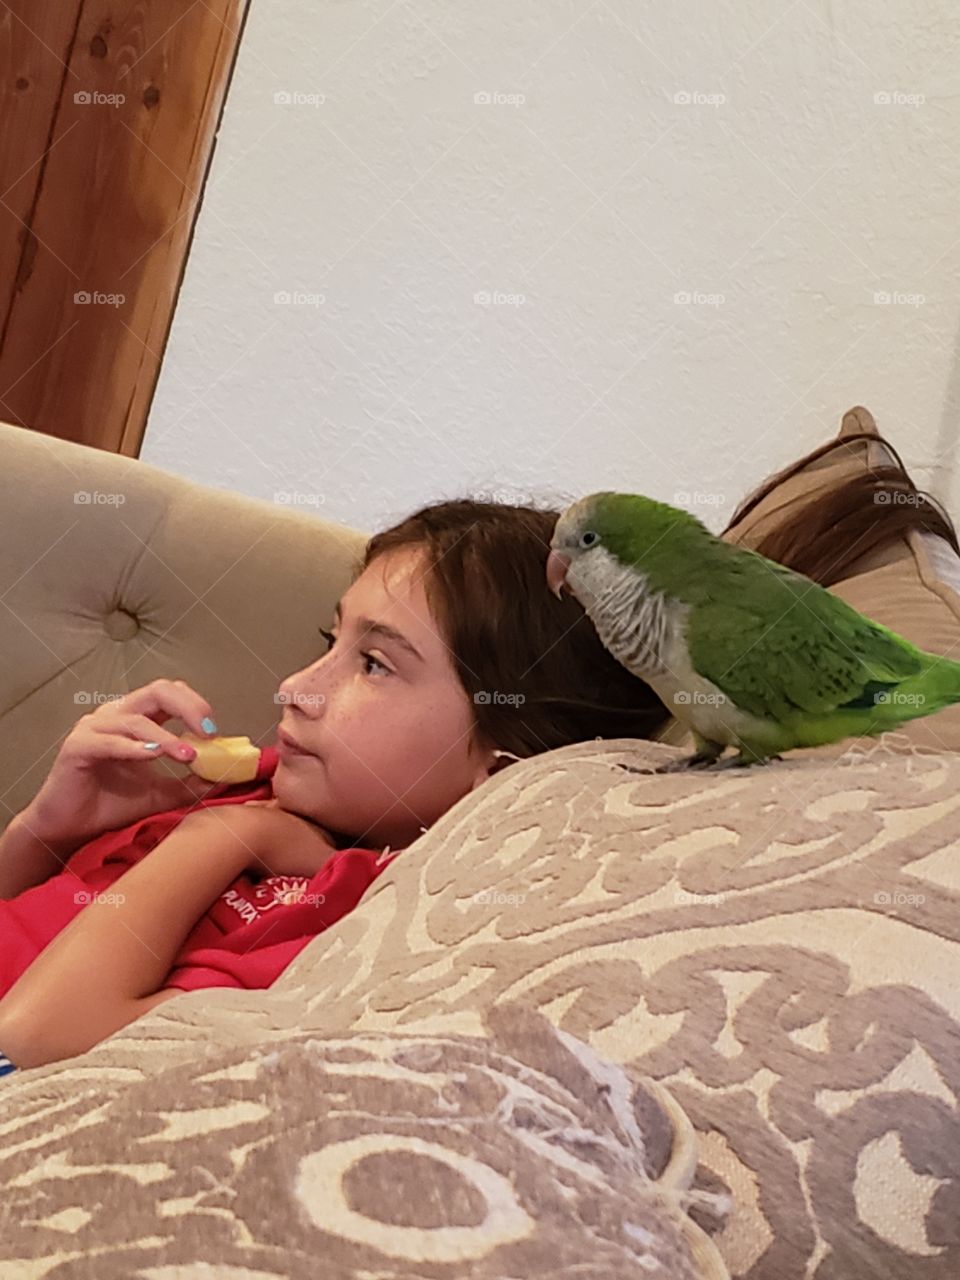 Real kid real bird eating an apple